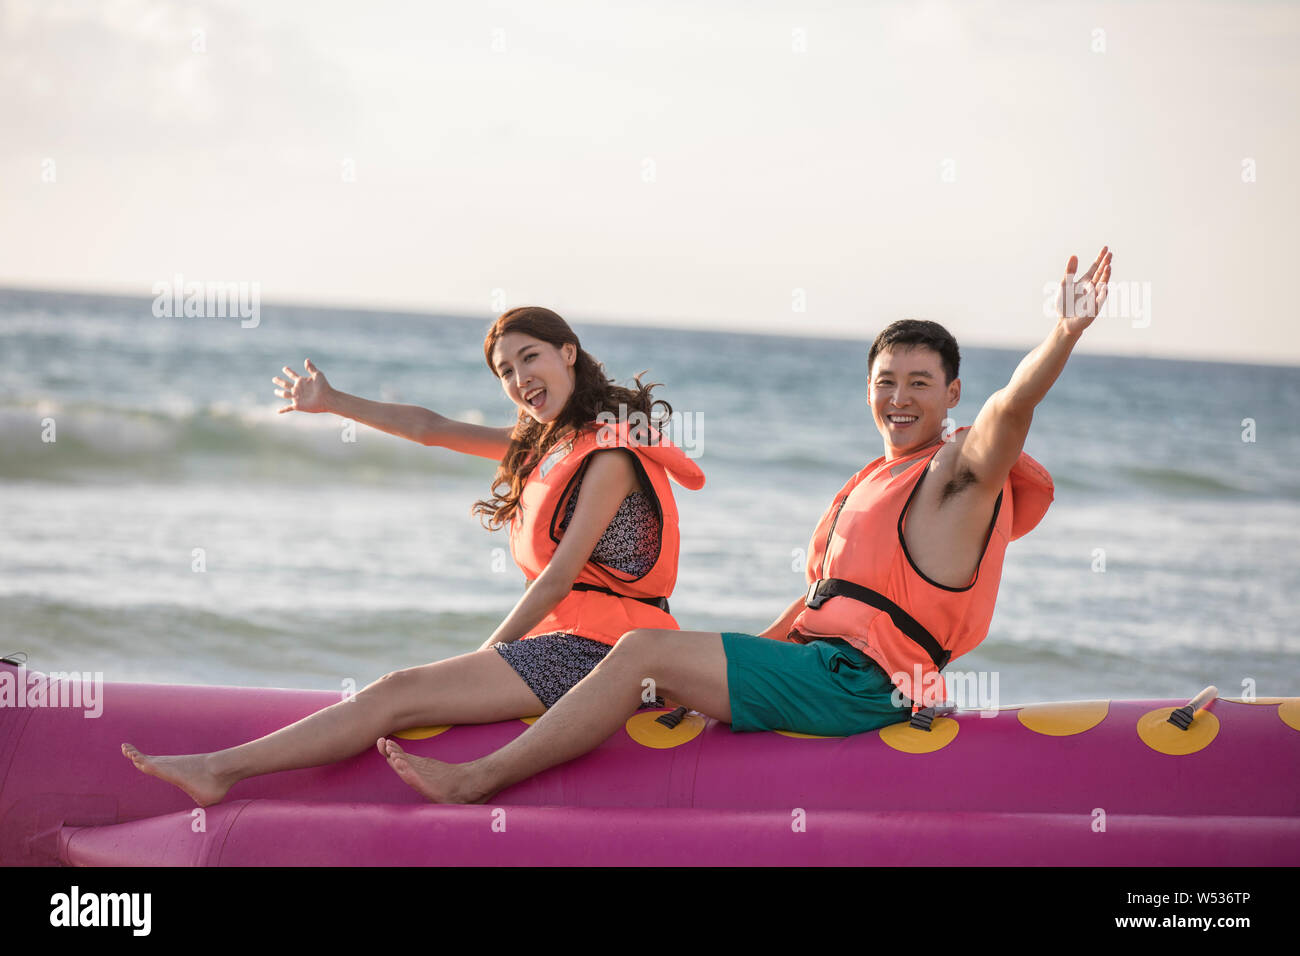 Happy young couple enjoying banana boat ride Stock Photo